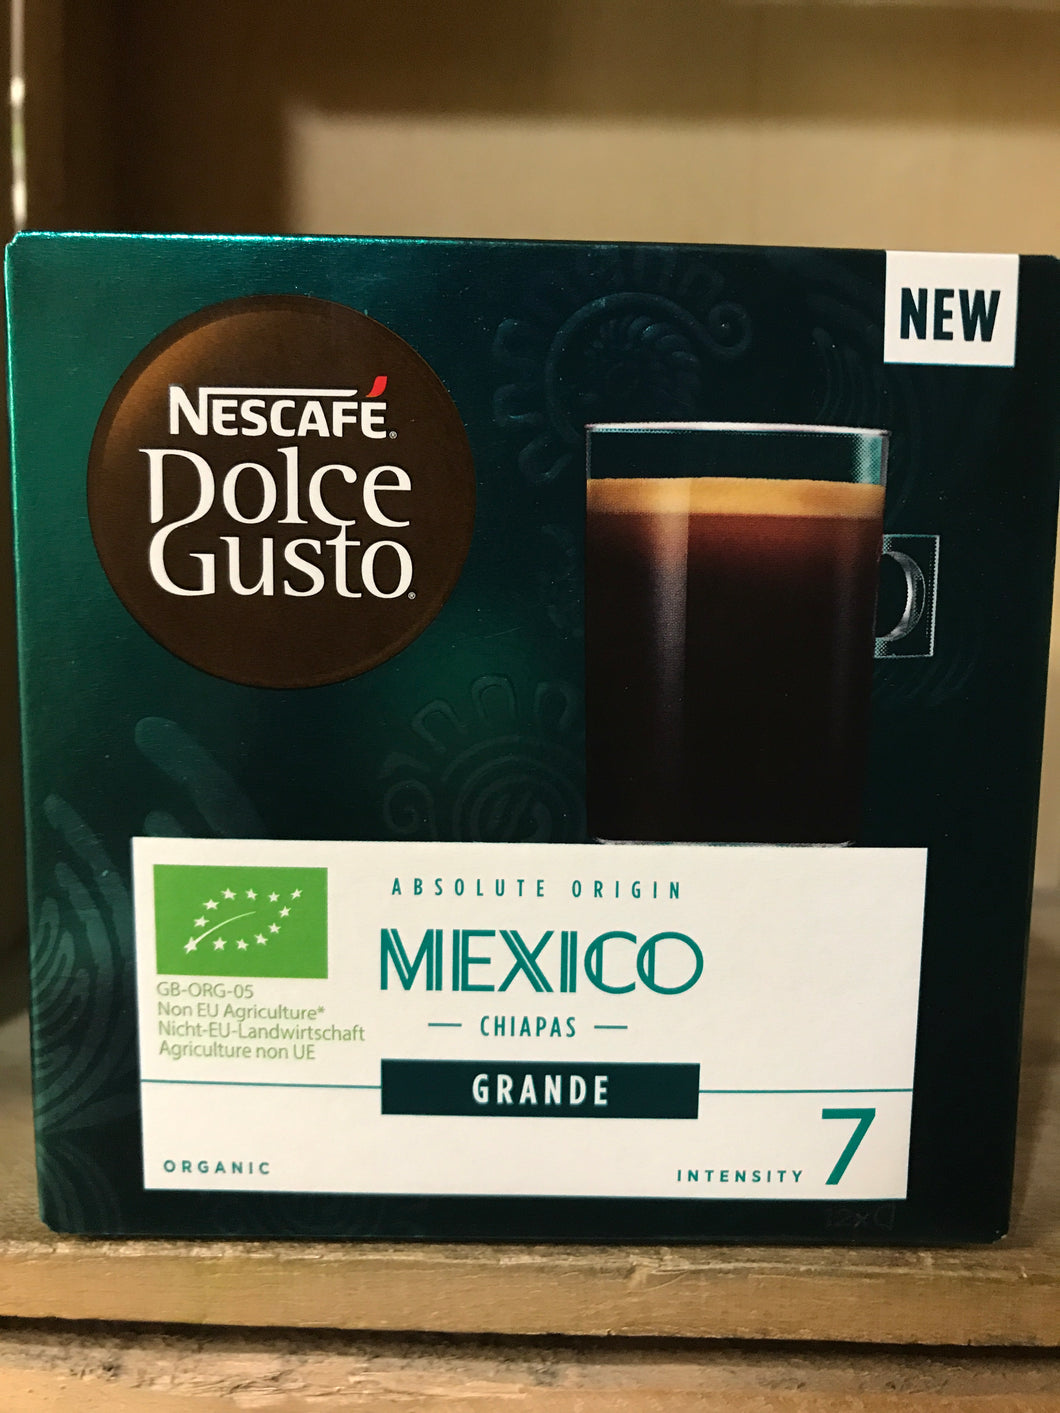 Nescafe Dolce Gusto Mexico Chiapas Grande 12 Pods 108g